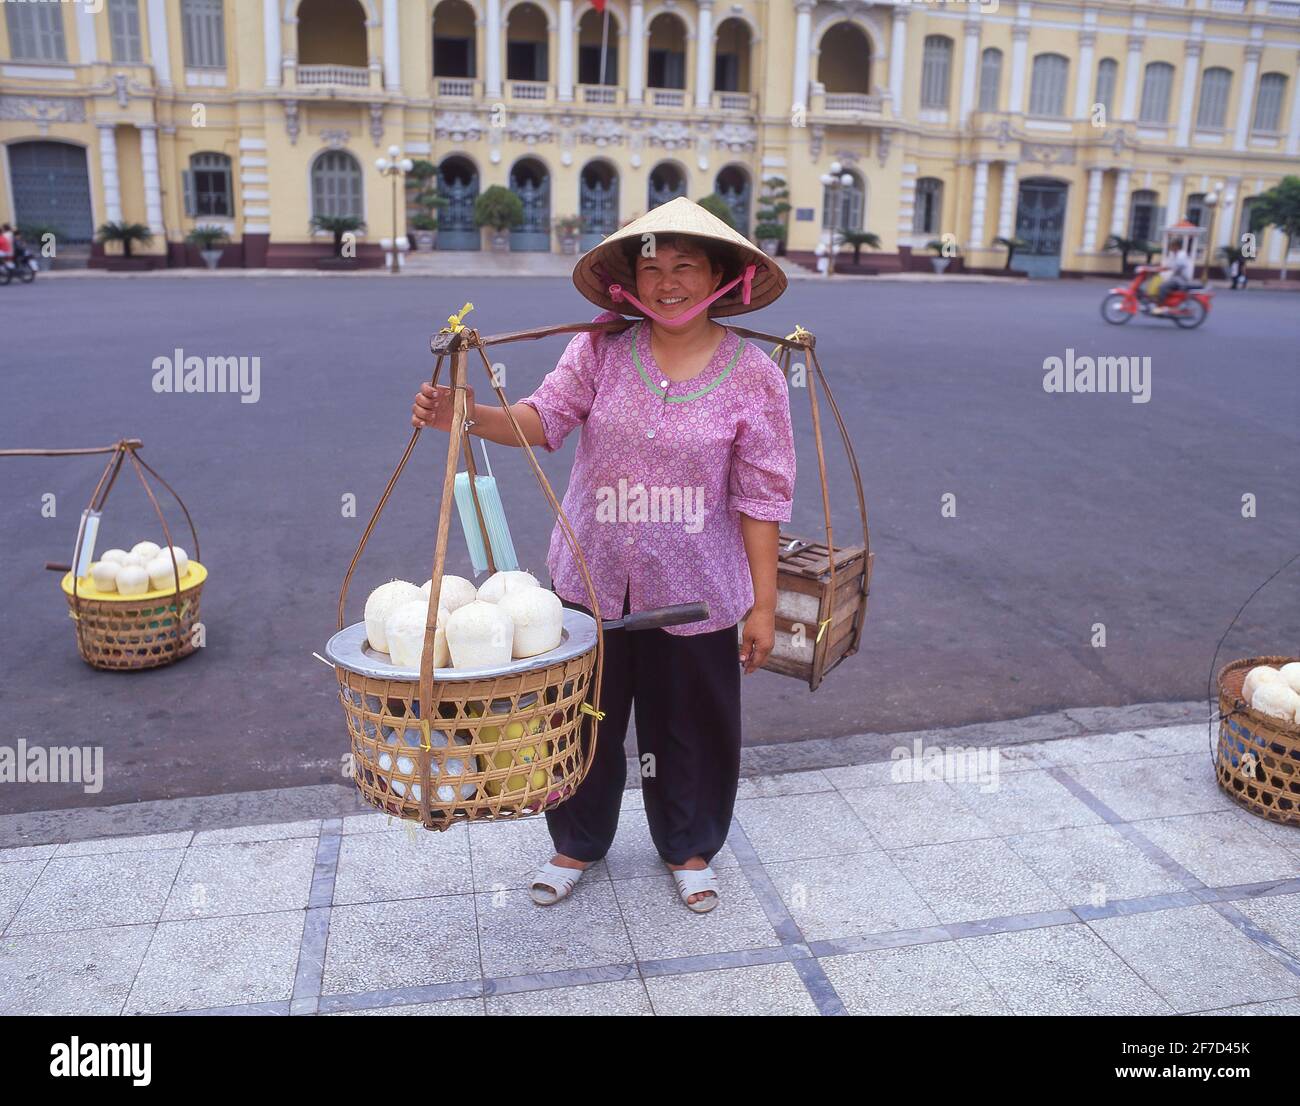 Frau, die Kokosnusssaft verkauft, vor dem Rathaus von Ho Chi Minh, Union Square, Ho Chi Minh City (Saigon), Sozialistische Republik Vietnam Stockfoto